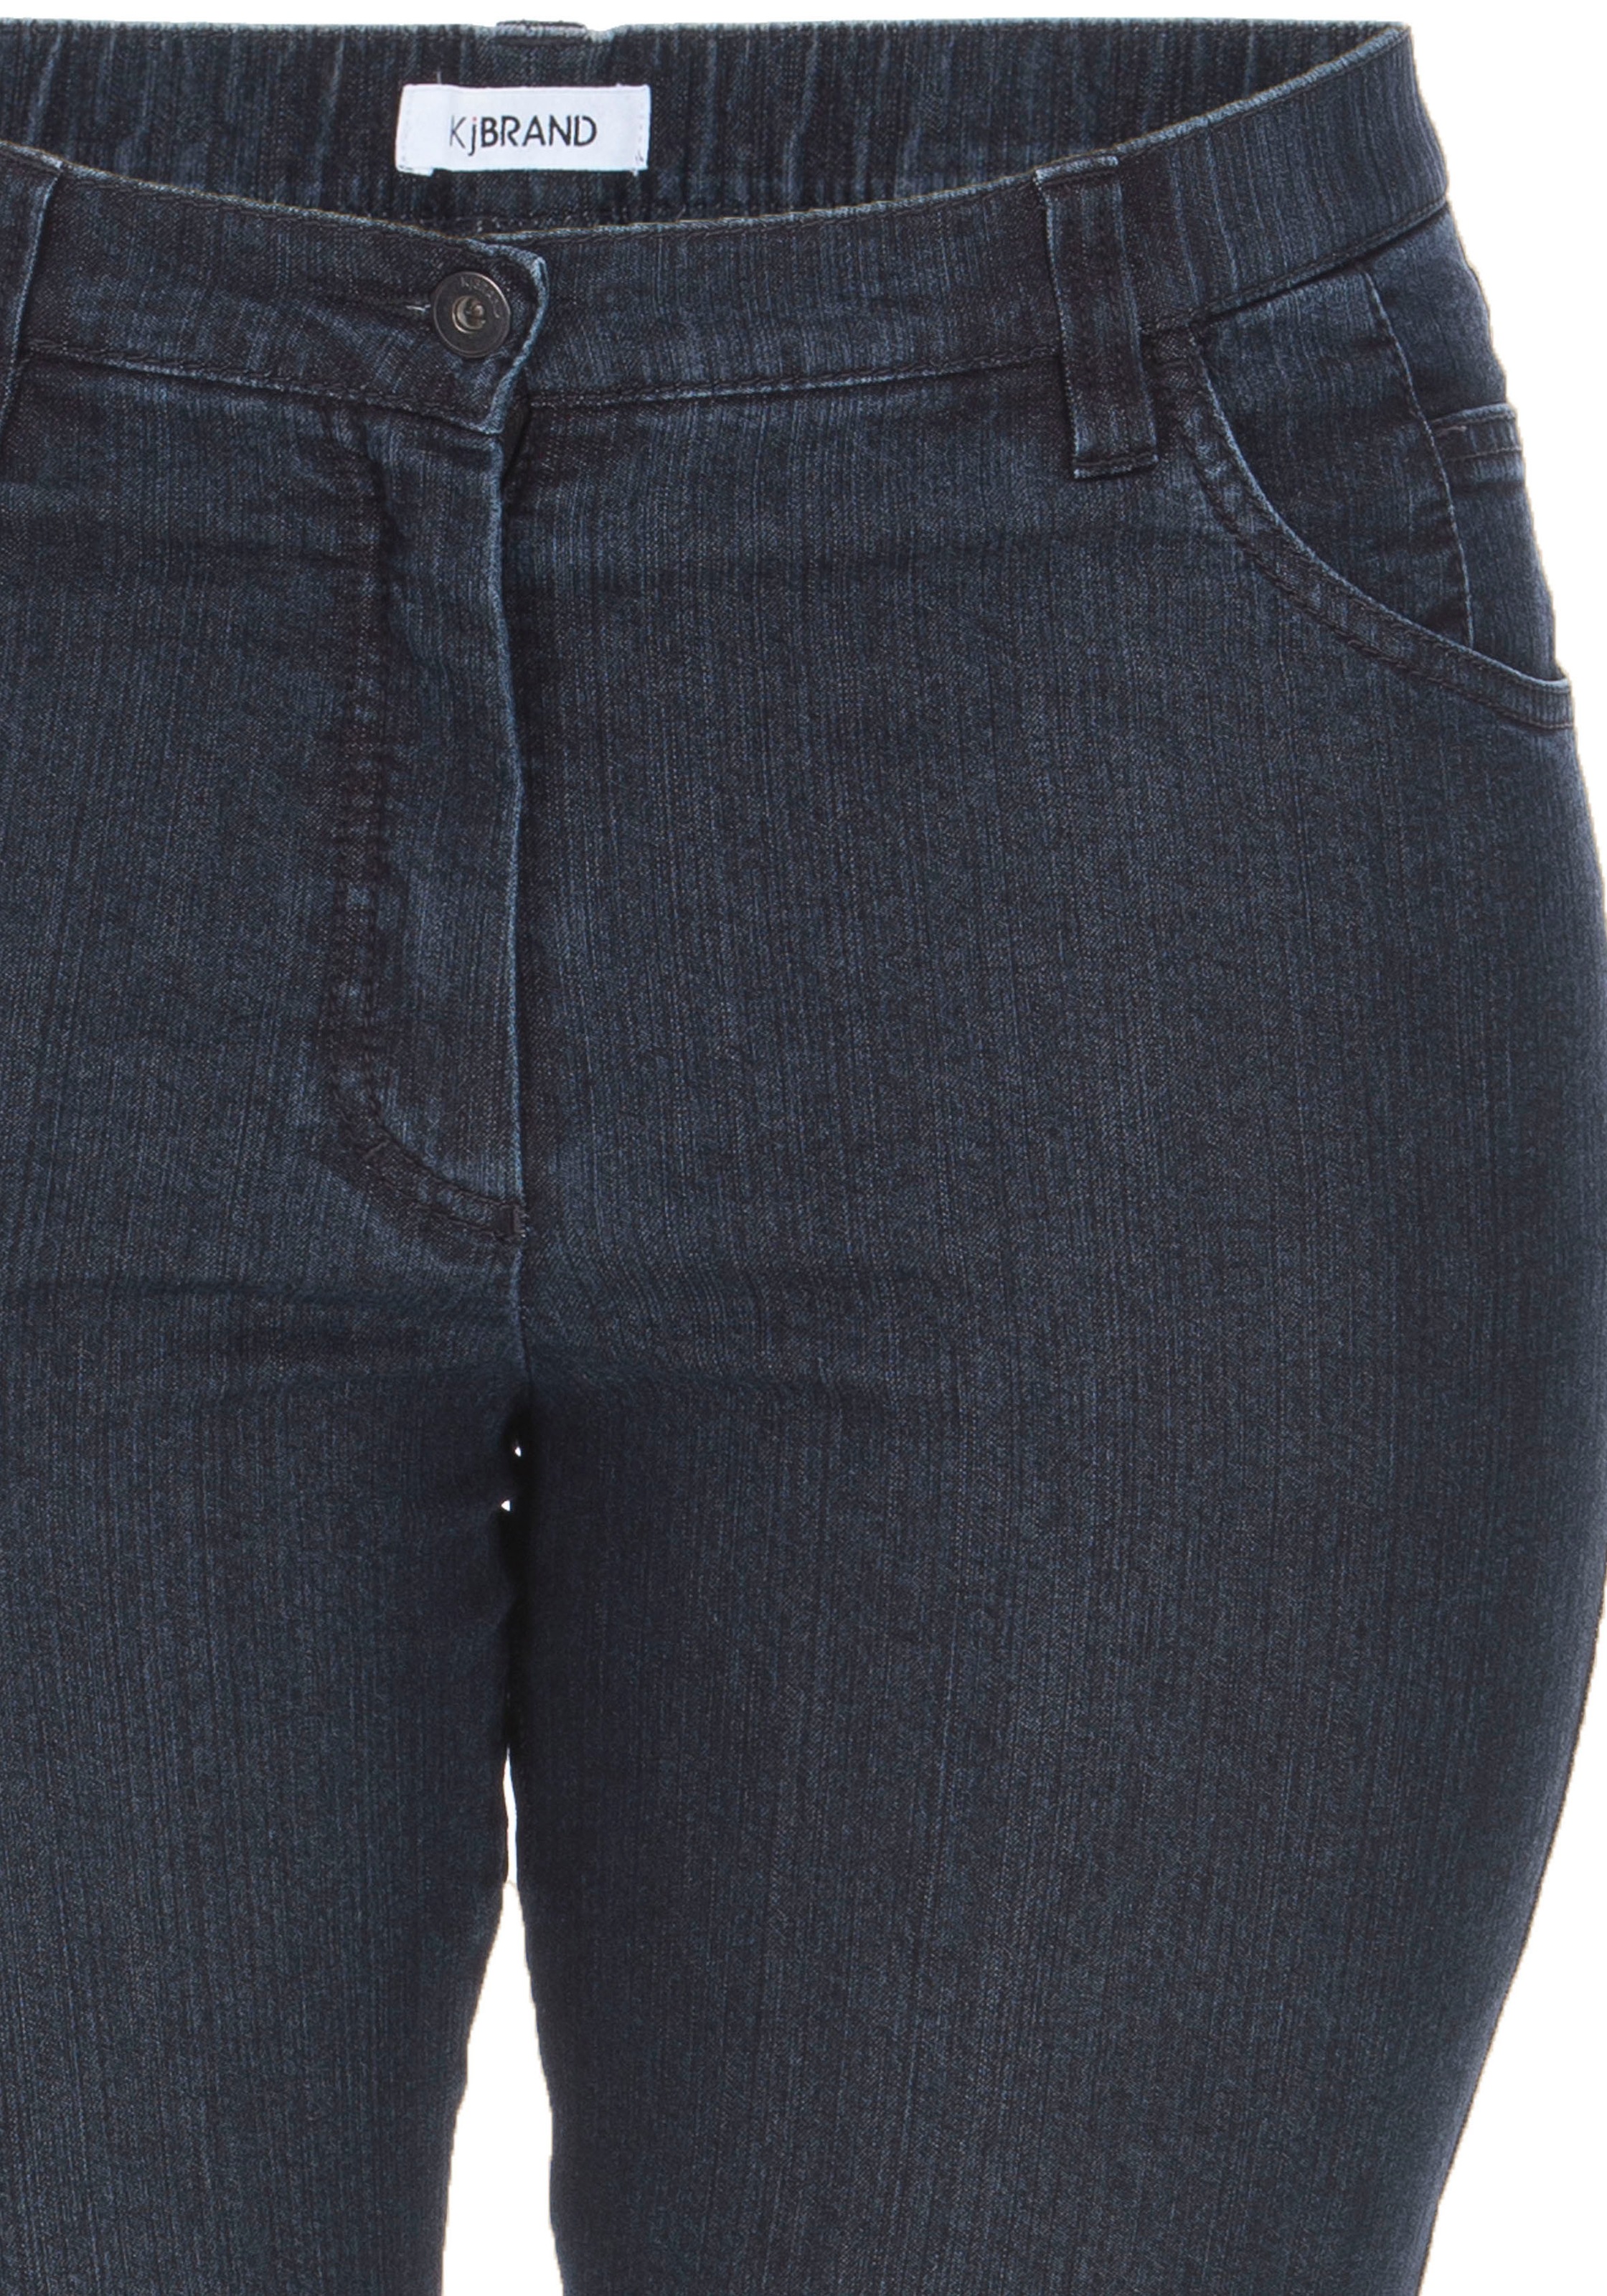 CS | kaufen »Betty BAUR für Denim mit KjBRAND Stretch-Jeans Stretch Stretch«,